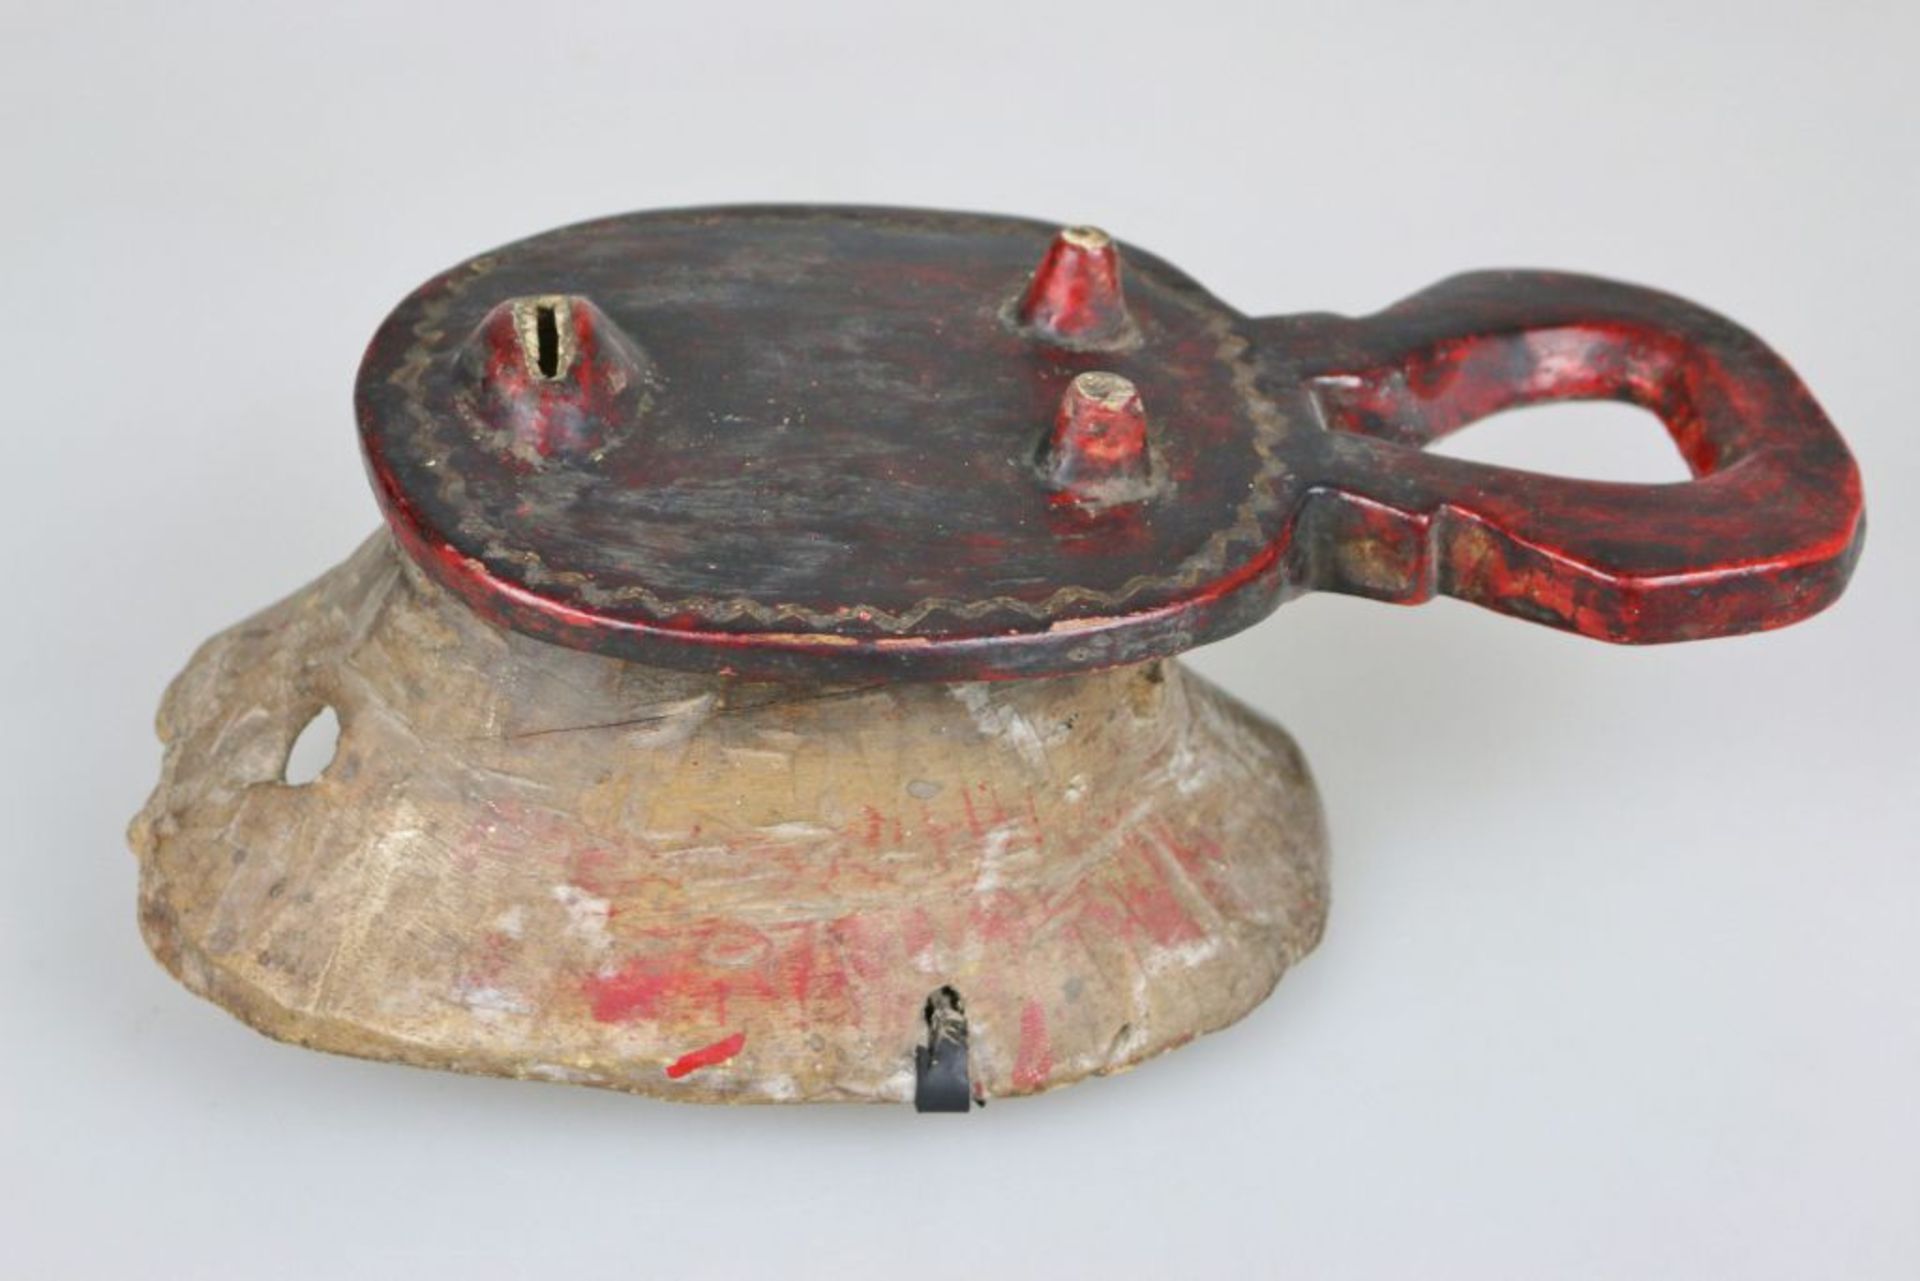 BAULE Goli Mask, Elfenbeinküste, kplekple yaswa, Holz, Kaolin, Erdpigmente. Das scheibenförmige - Image 2 of 3